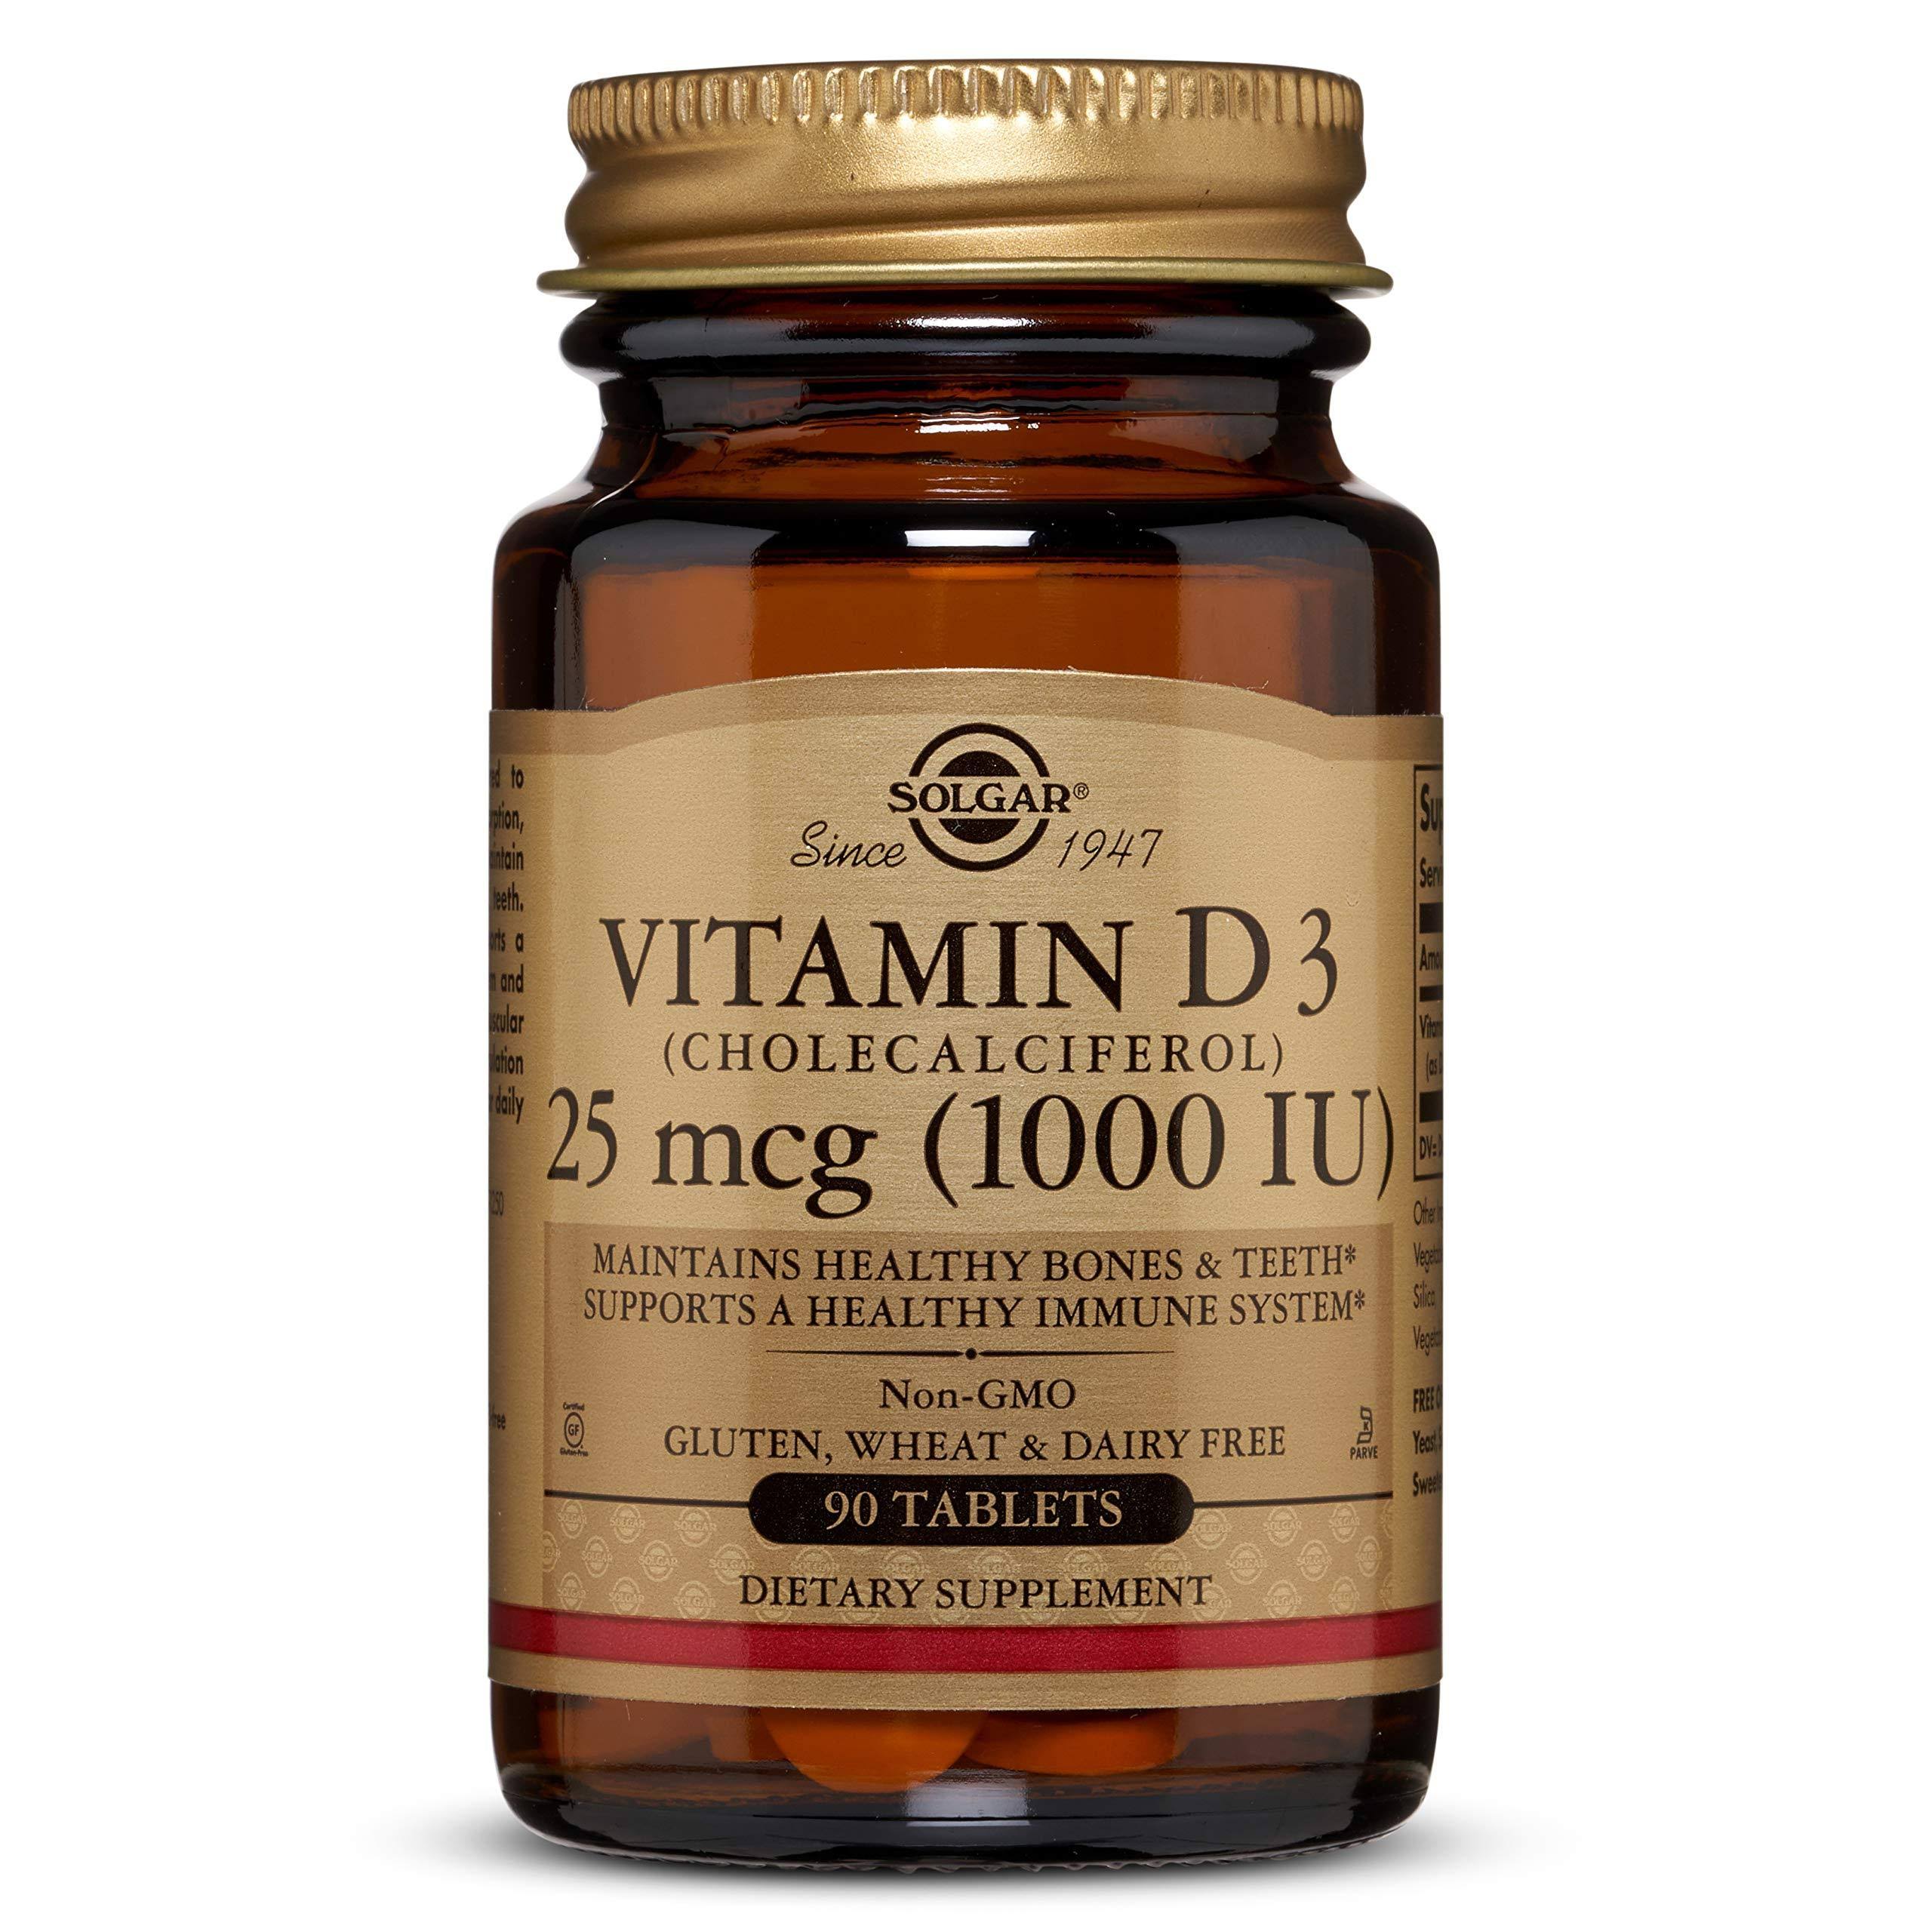 Solgar vitamin d3 cholecalciferol. Solgar Dry Vitamin a 1500 MCG (5000 IU). Solgar Dry Vitamin a. Солгар витамин д. Солгар витамины для детей.